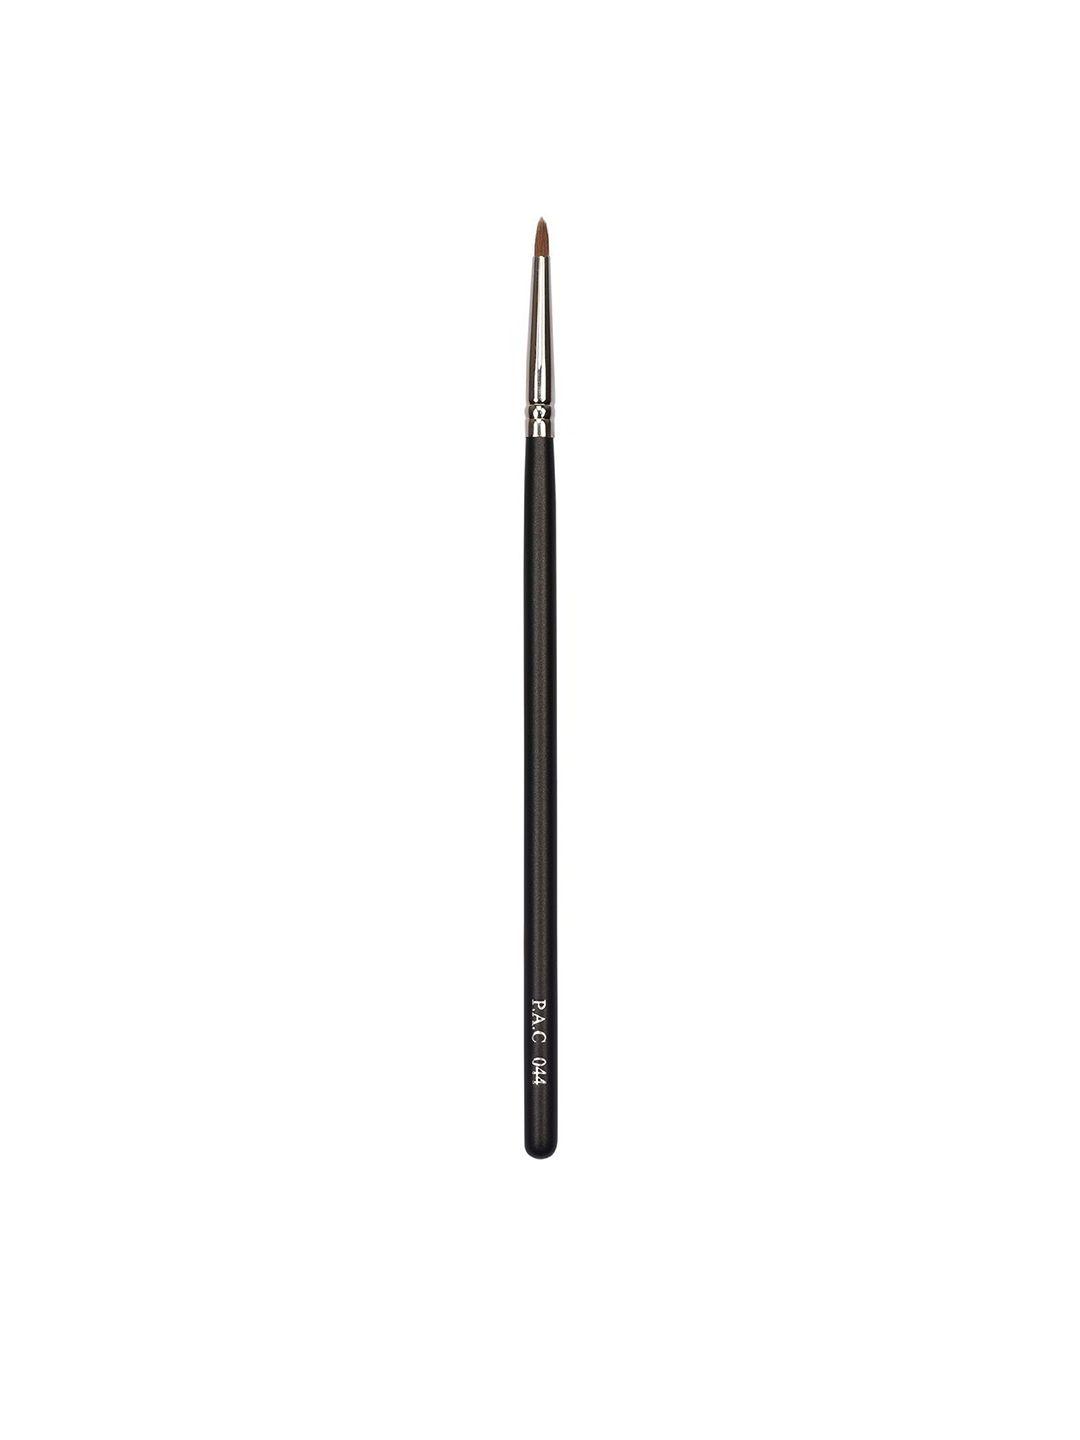 pac black eyeliner brush - 044